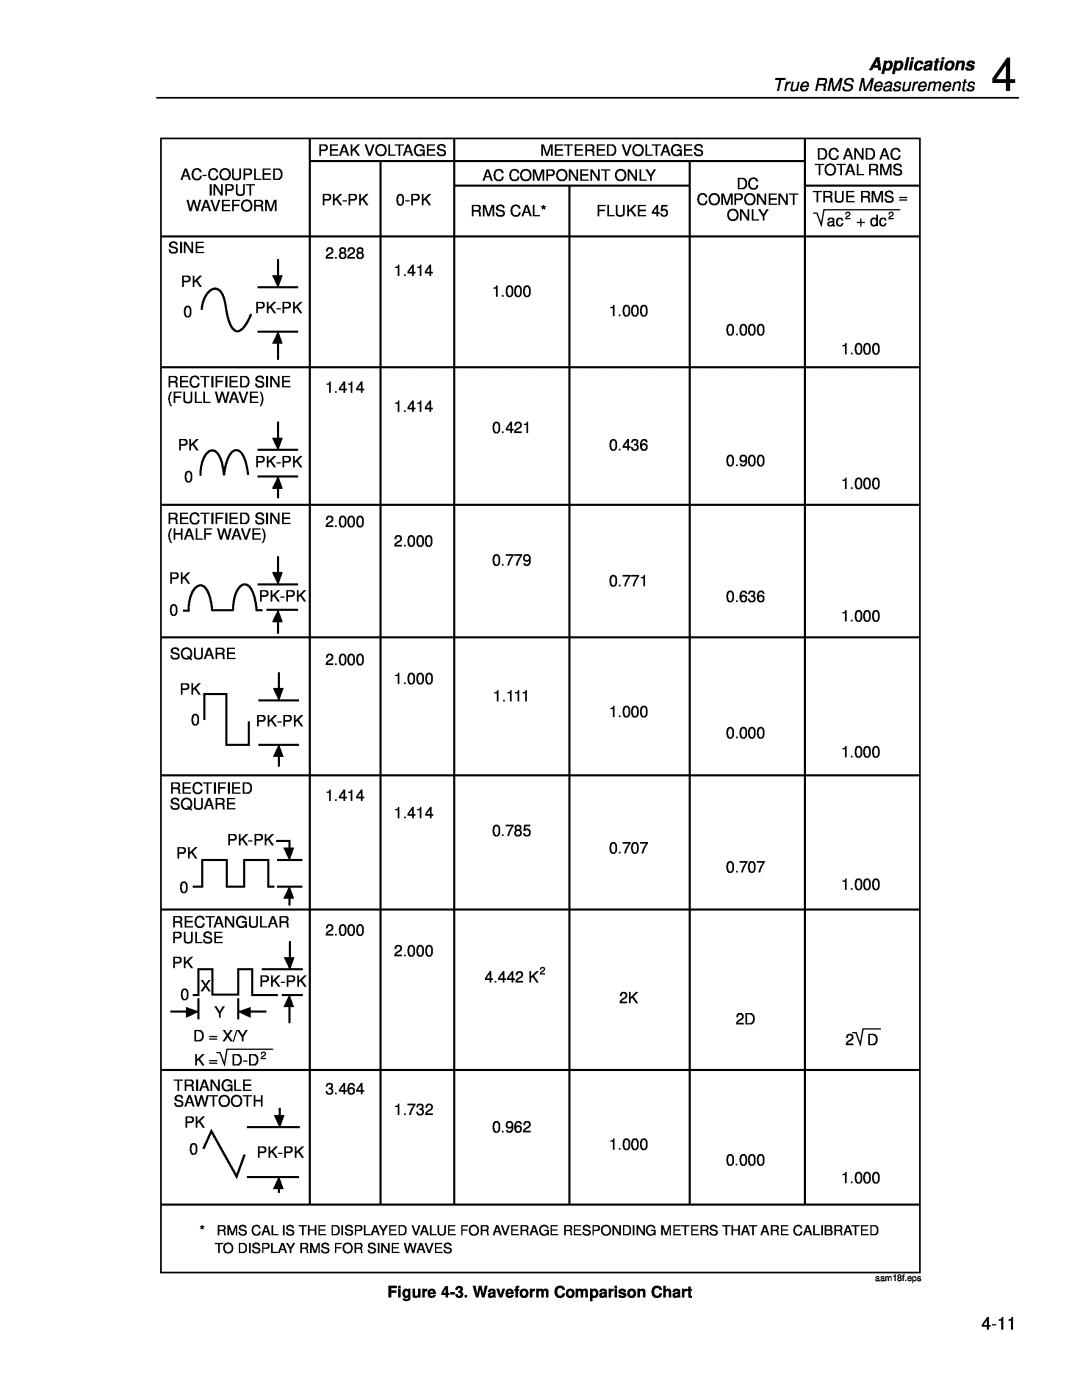 Fluke 45 user manual Applications, True RMS Measurements, 4-11, 3.Waveform Comparison Chart 